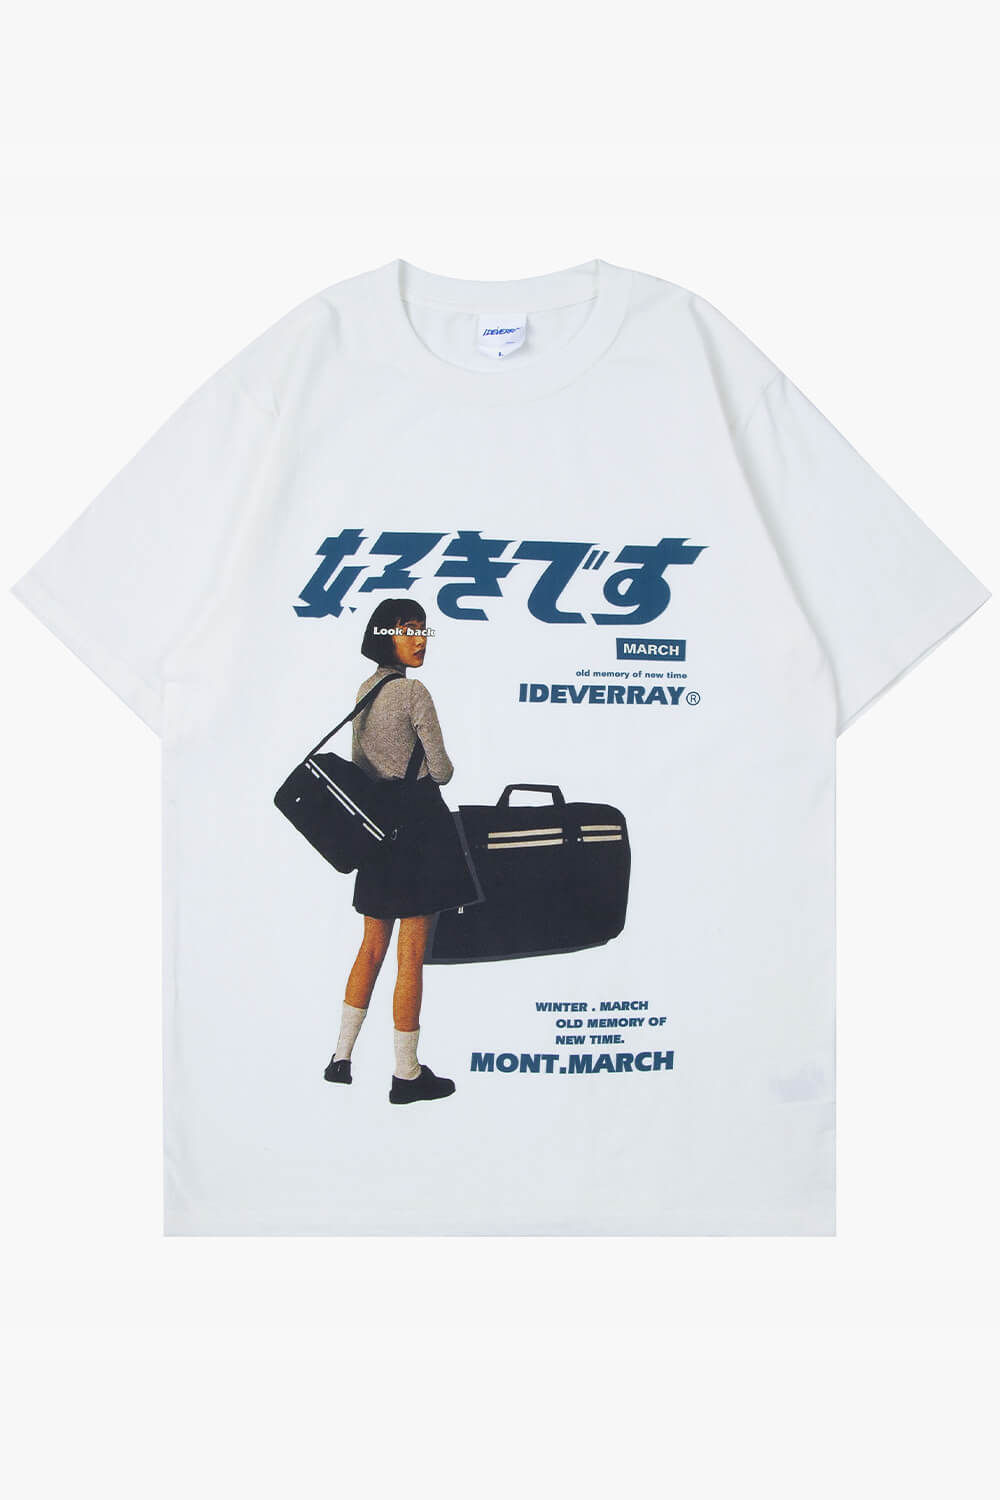 Japanese Retro Travel Girl T-Shirt